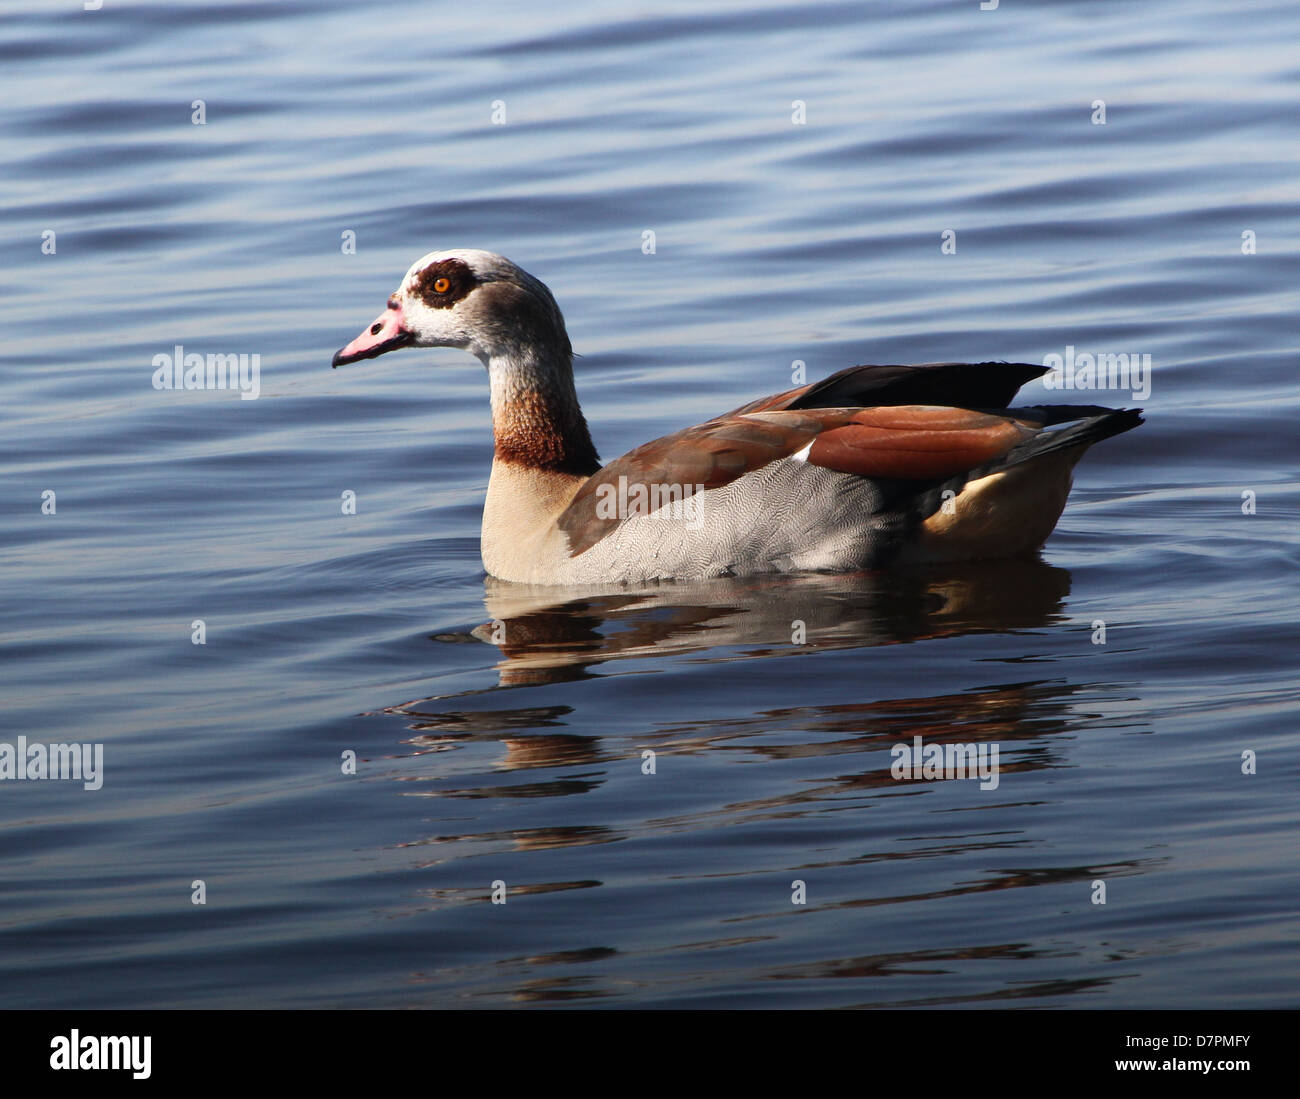 Male Egyptian Goose (Alopochen aegyptiaca) swimming in a lake Stock Photo